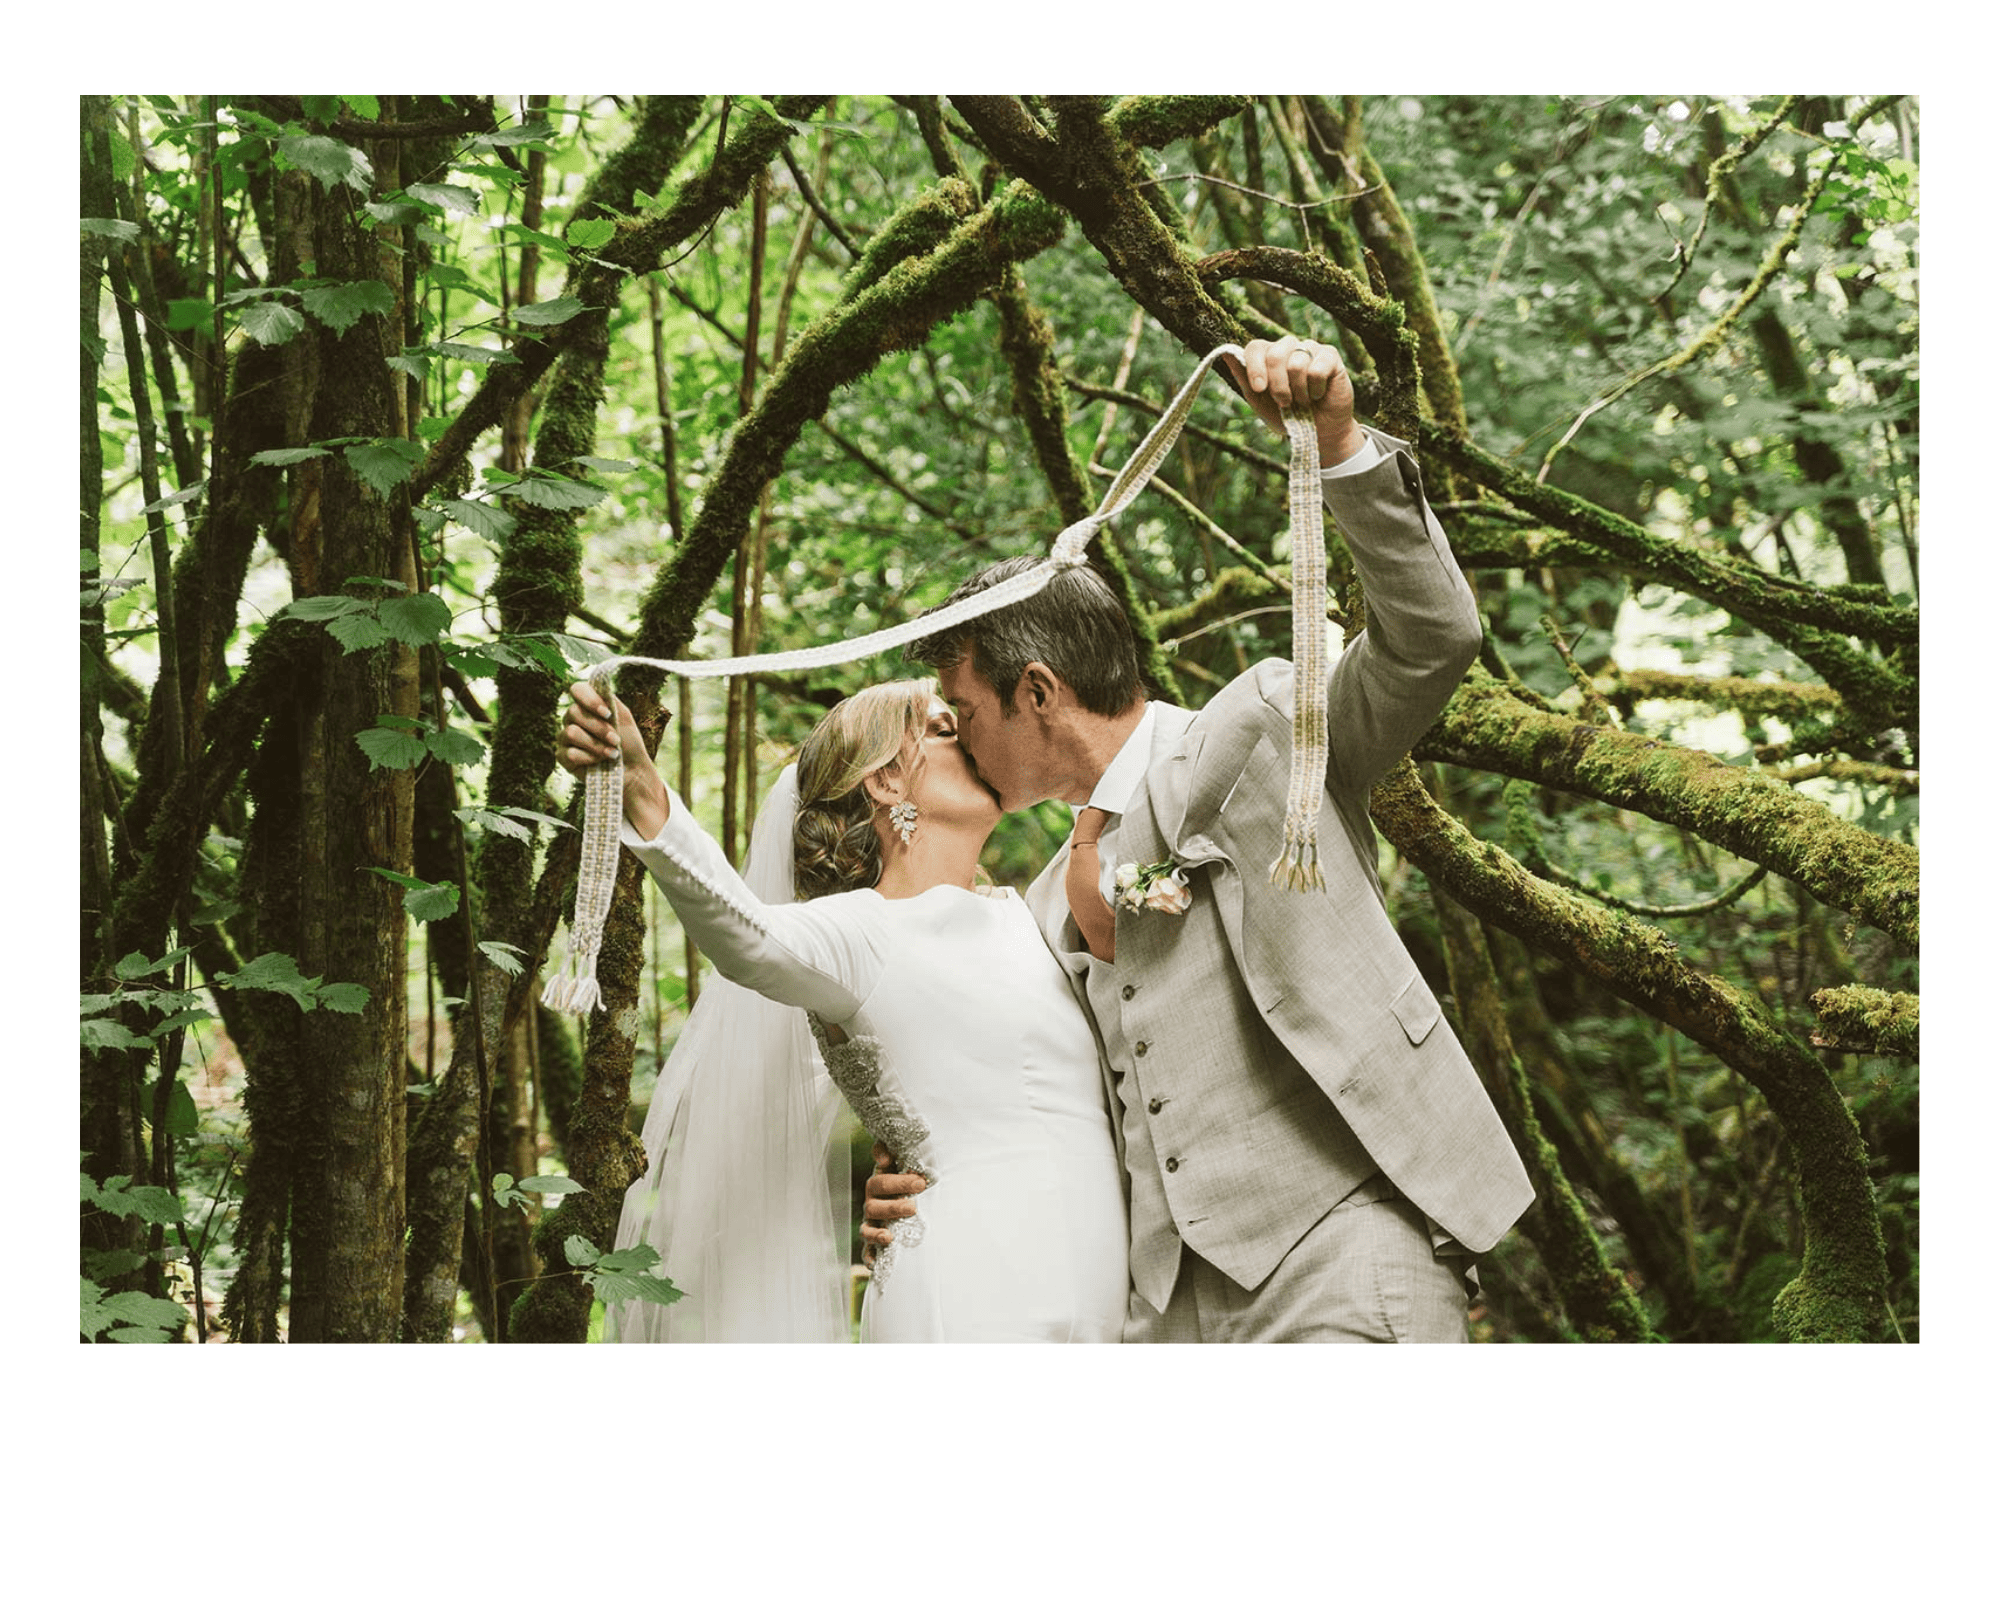 elopement ceremonies in nature while eloping in Ireland